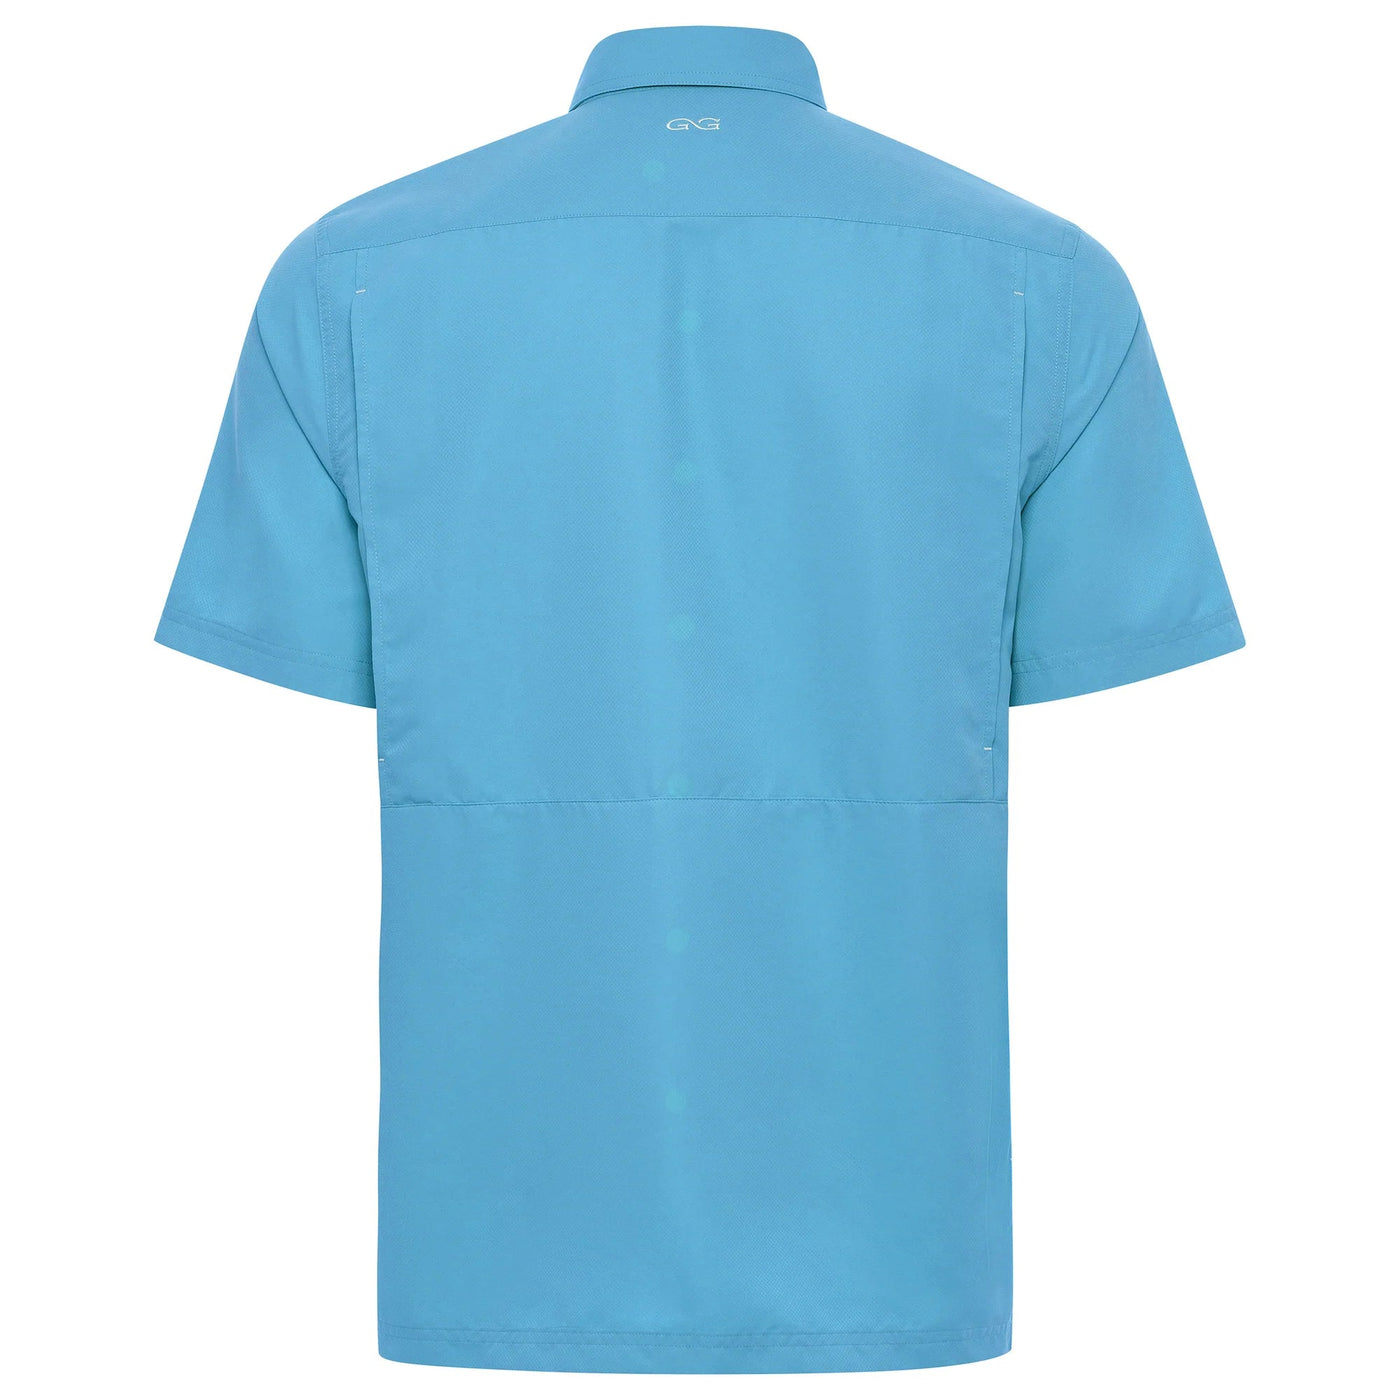 Gameguard BlueWave Microfiber Short Sleeve Classic Fit Shirt